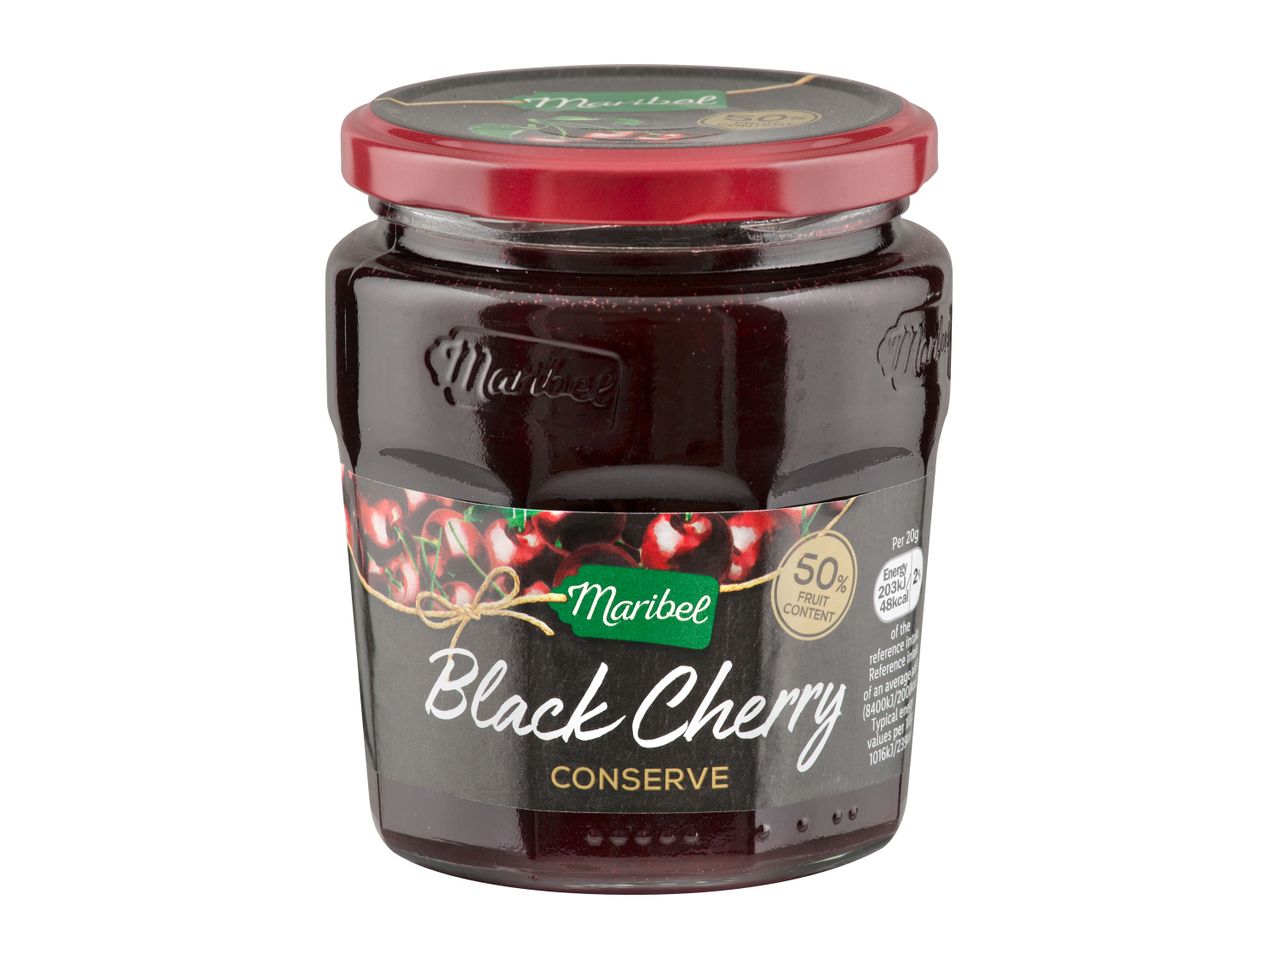 Go to full screen view: Maribel Premium Black Cherry Conserve - Image 1